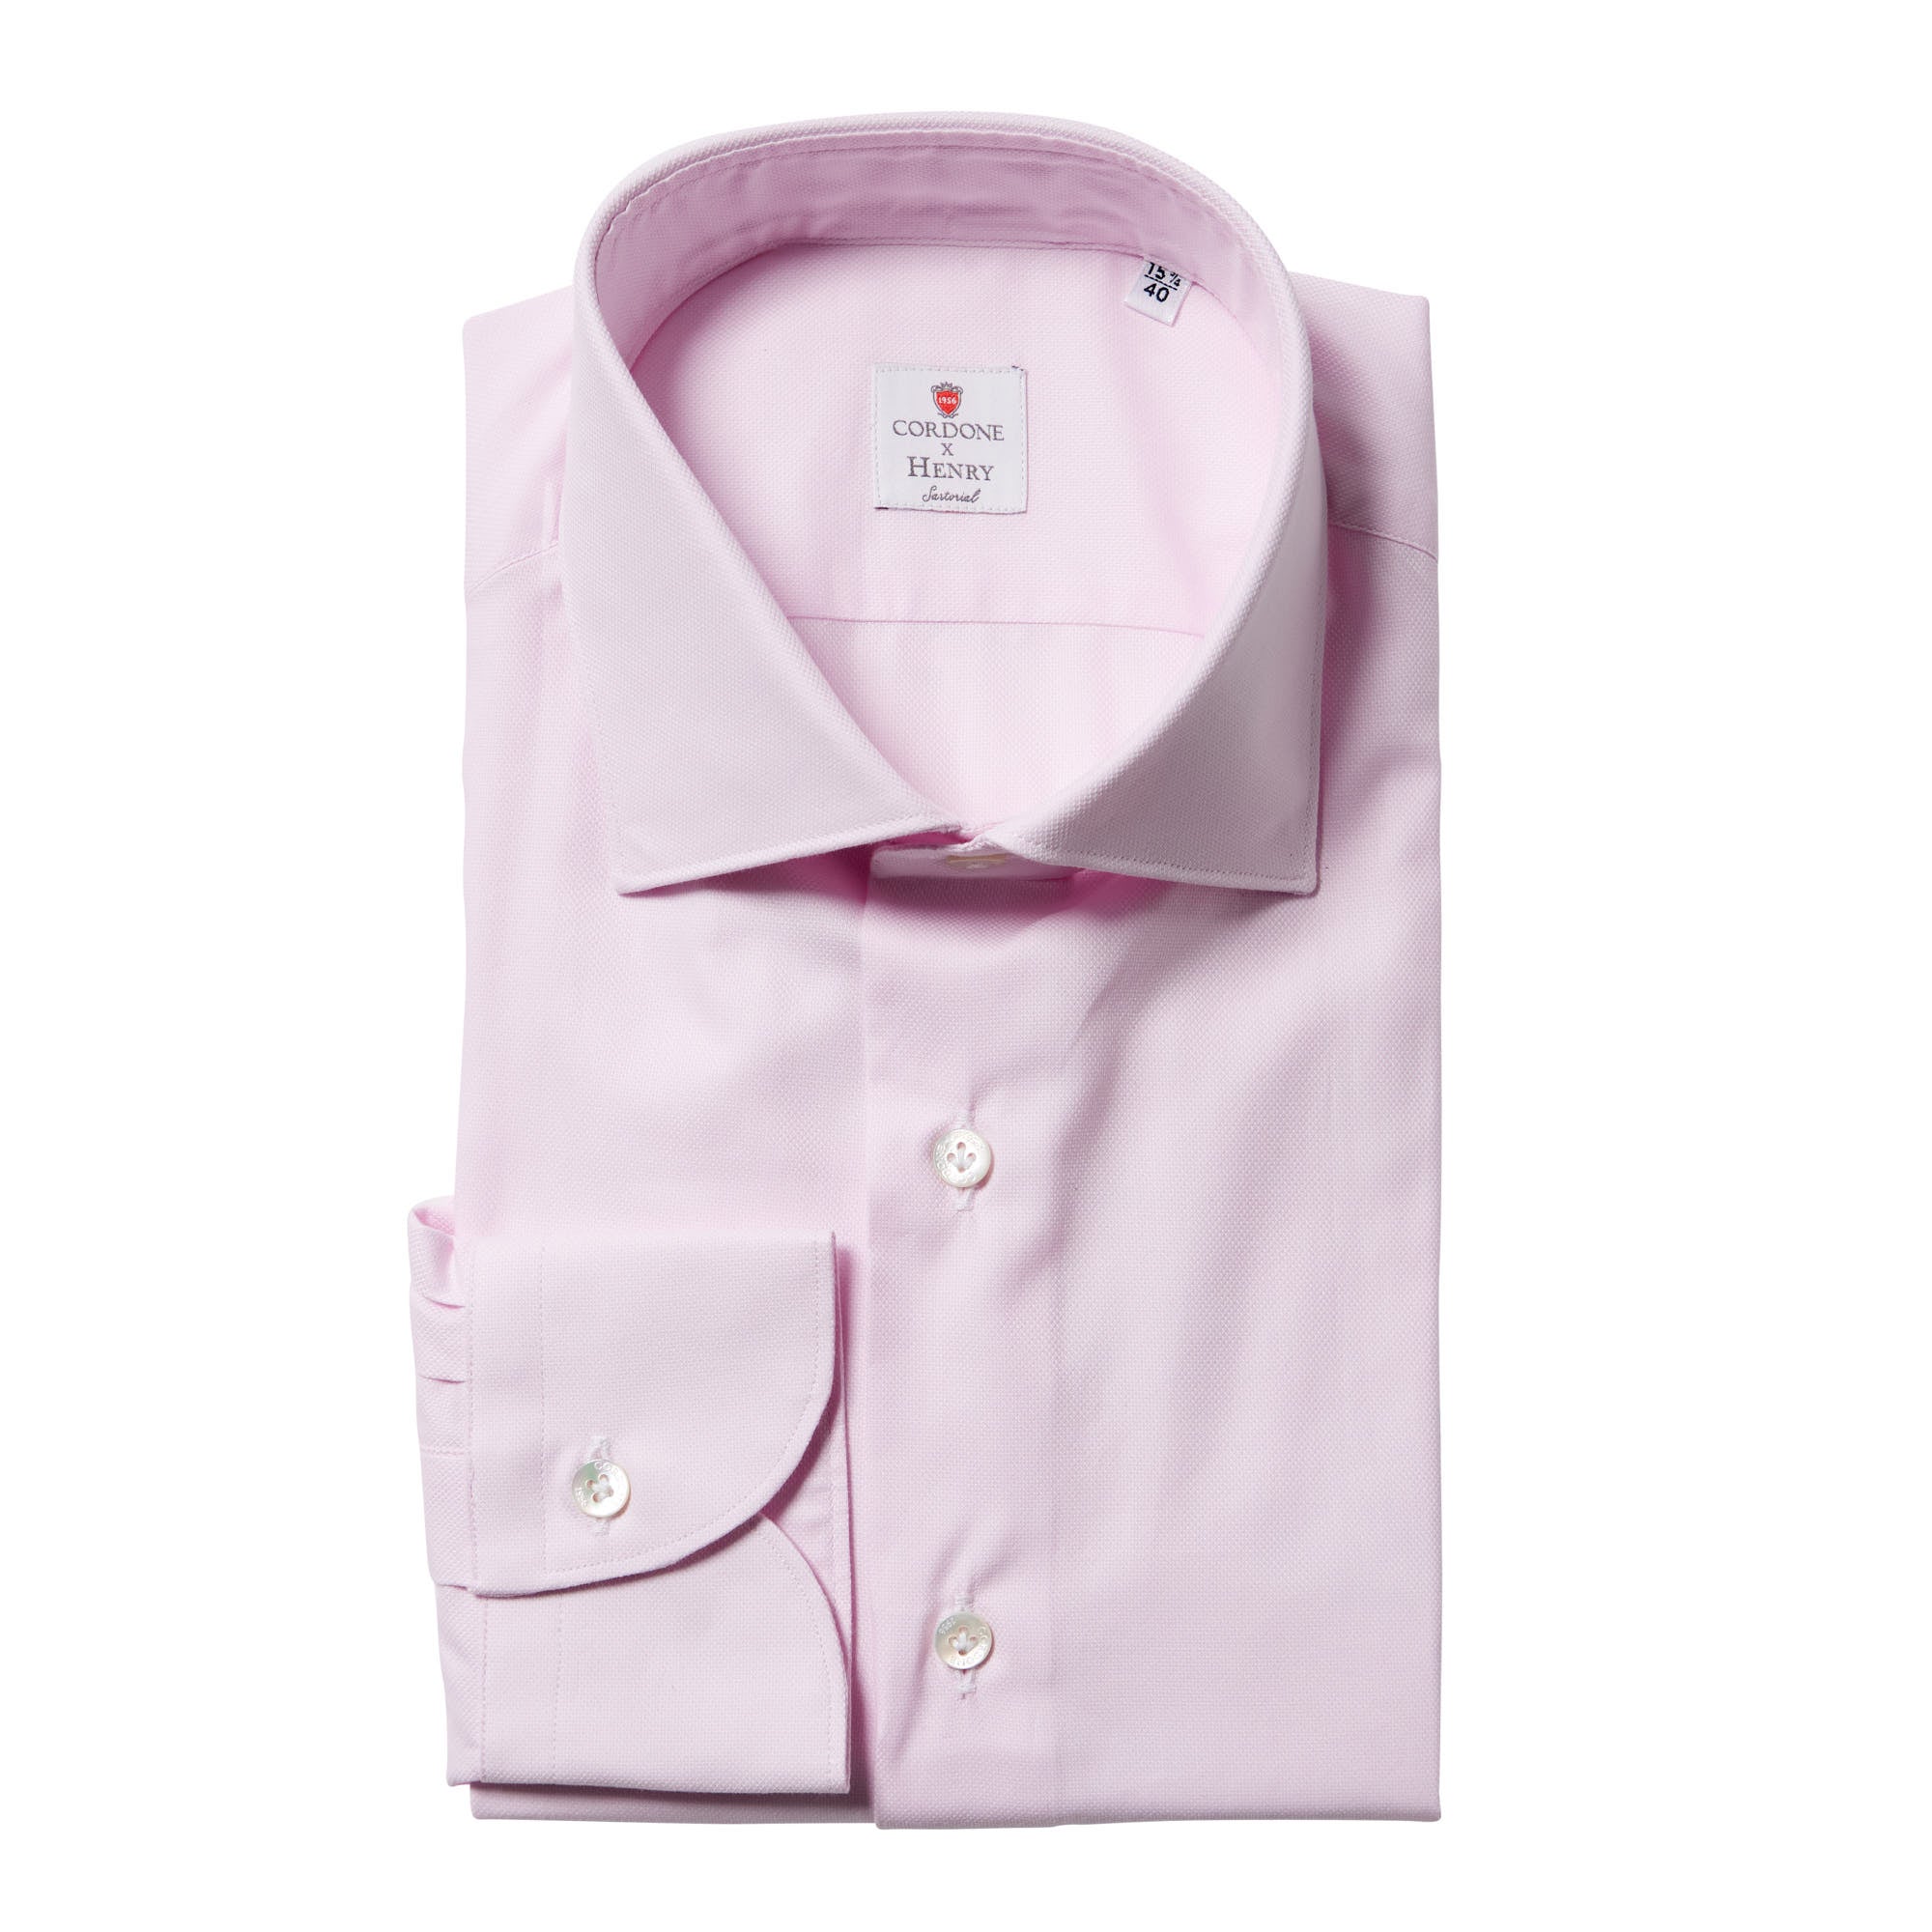 CORDONE Cotton Long Sleeve Single Cuff Shirt LIGHT PINK - Henry BucksShirts38AW240078 - LTPINK - SC - 39